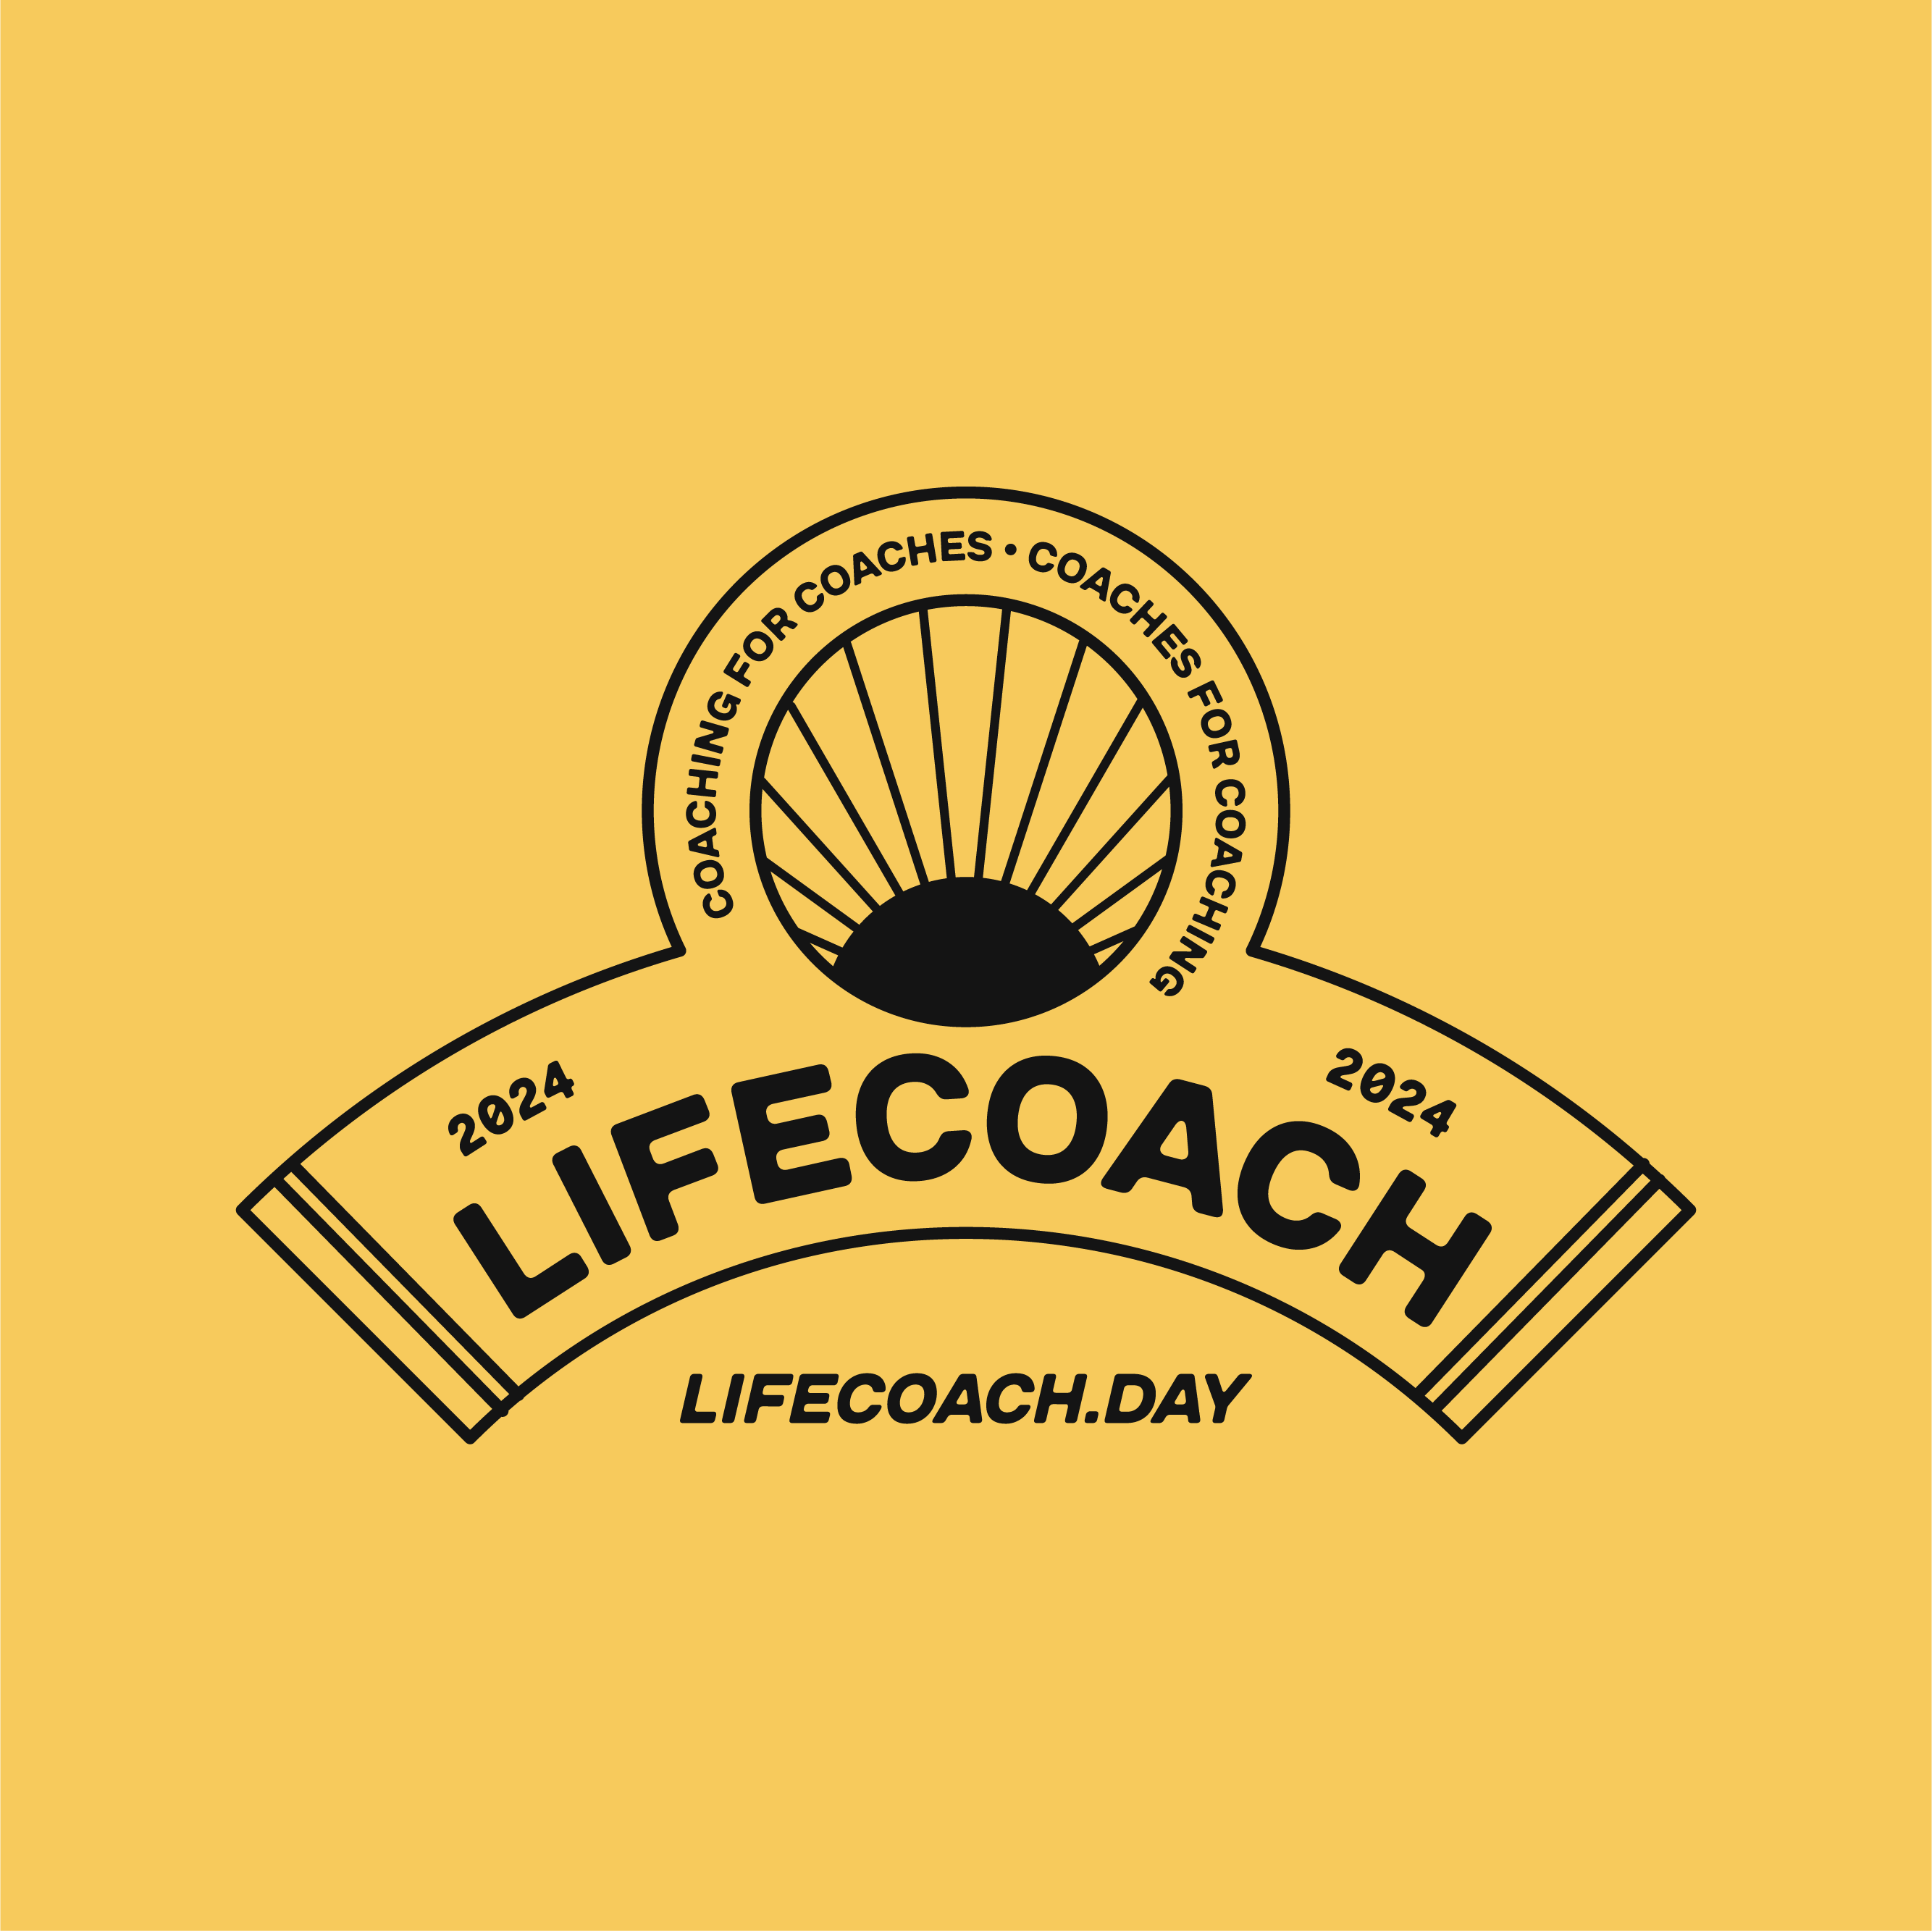 lifecoach.day custom logo product card image